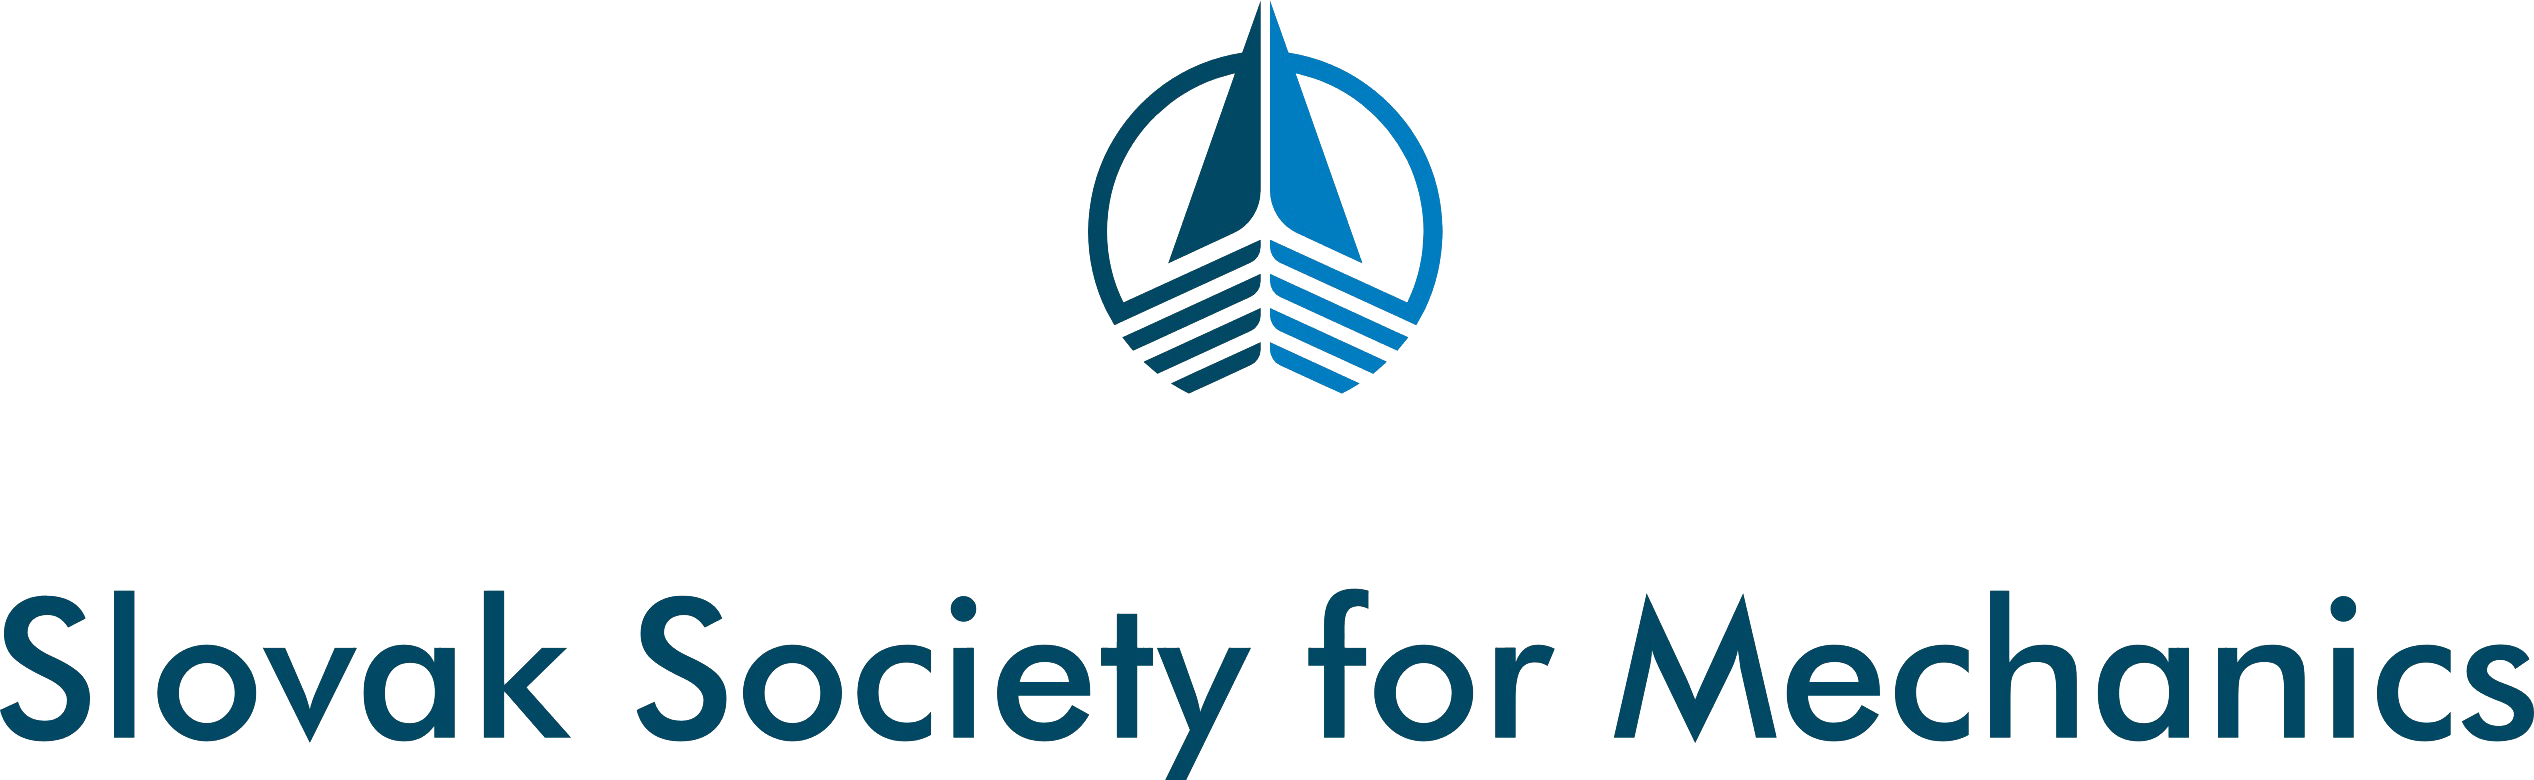 Slovak Society for Mechanics of Slovak Academy of Sciences